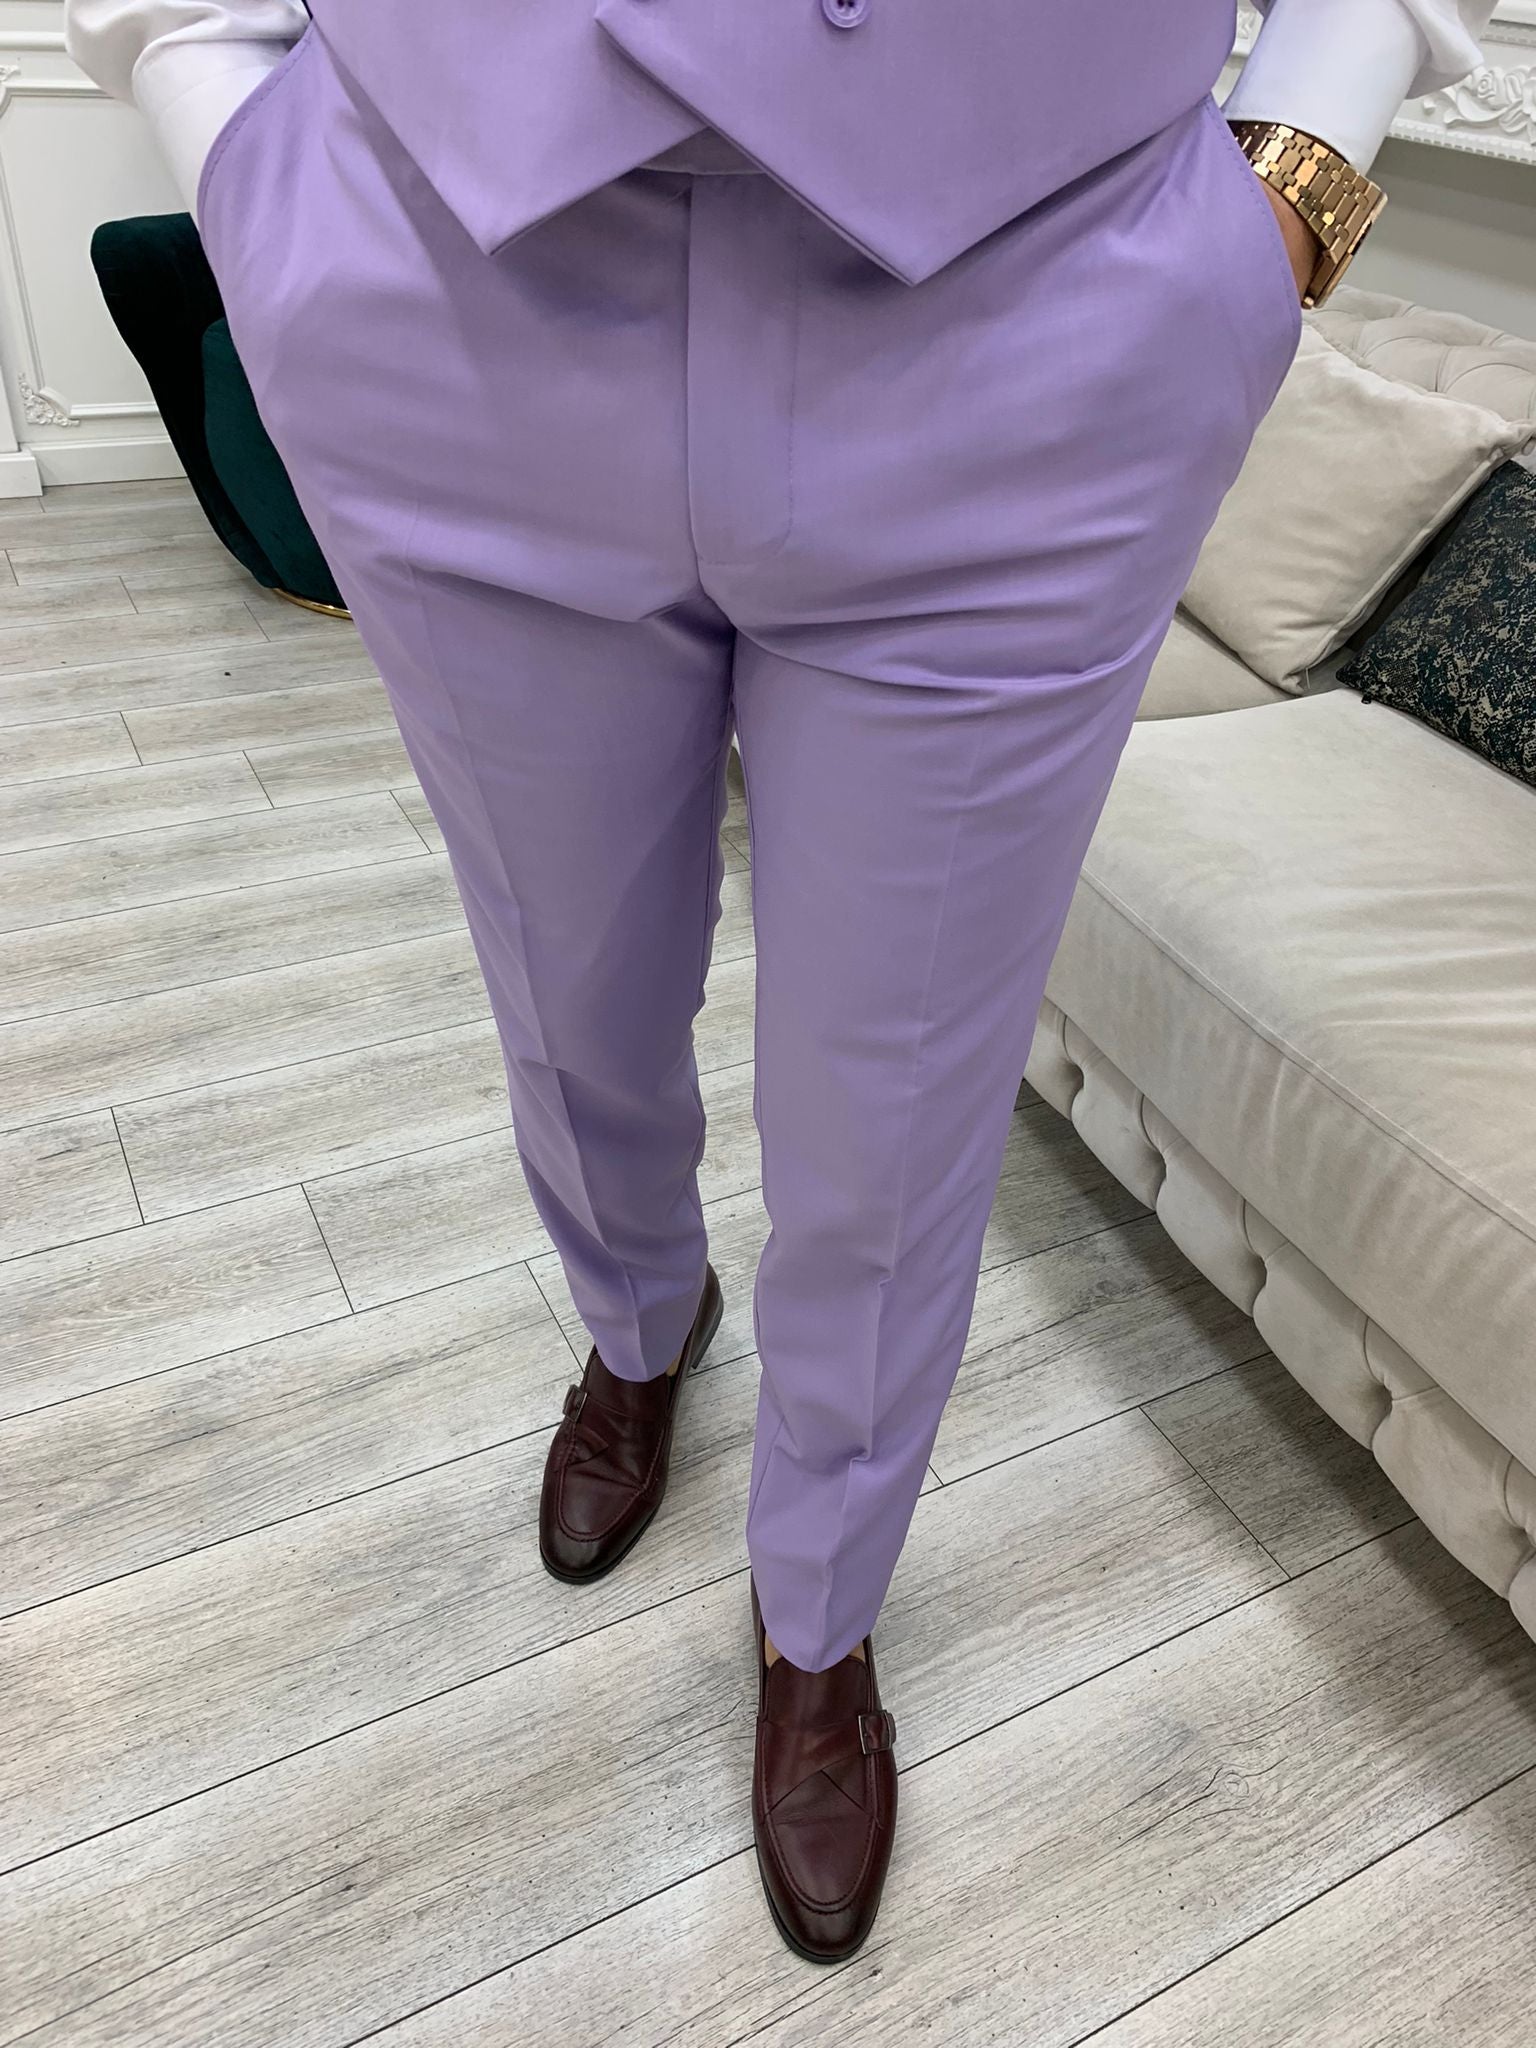 Slim Fit Linen suit trousers  Heather purple  Men  HM IN